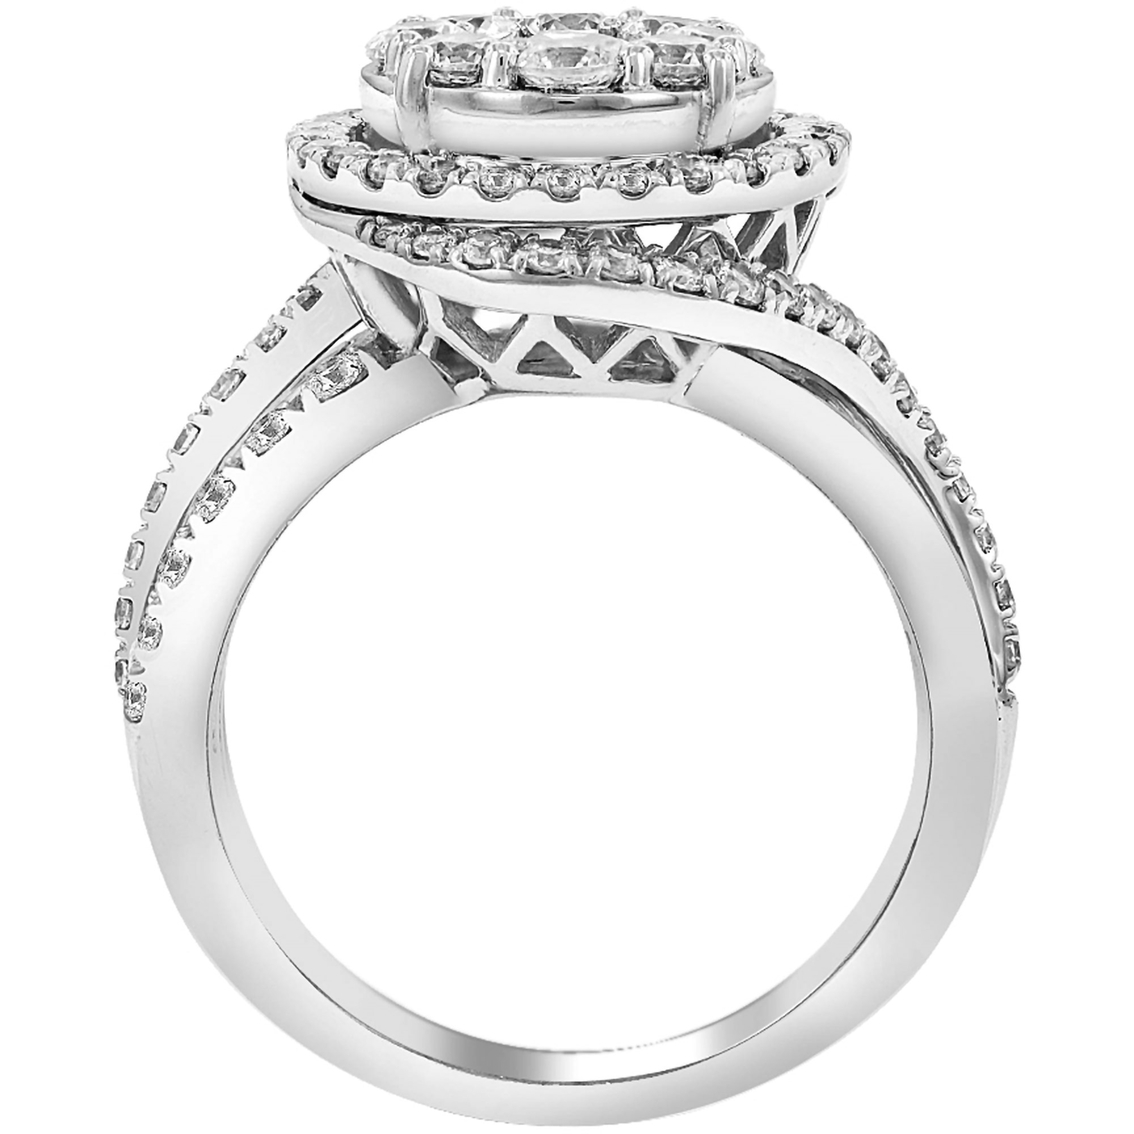 10K White Gold 2 CTW Diamond Ring, Size 7 - Image 2 of 4